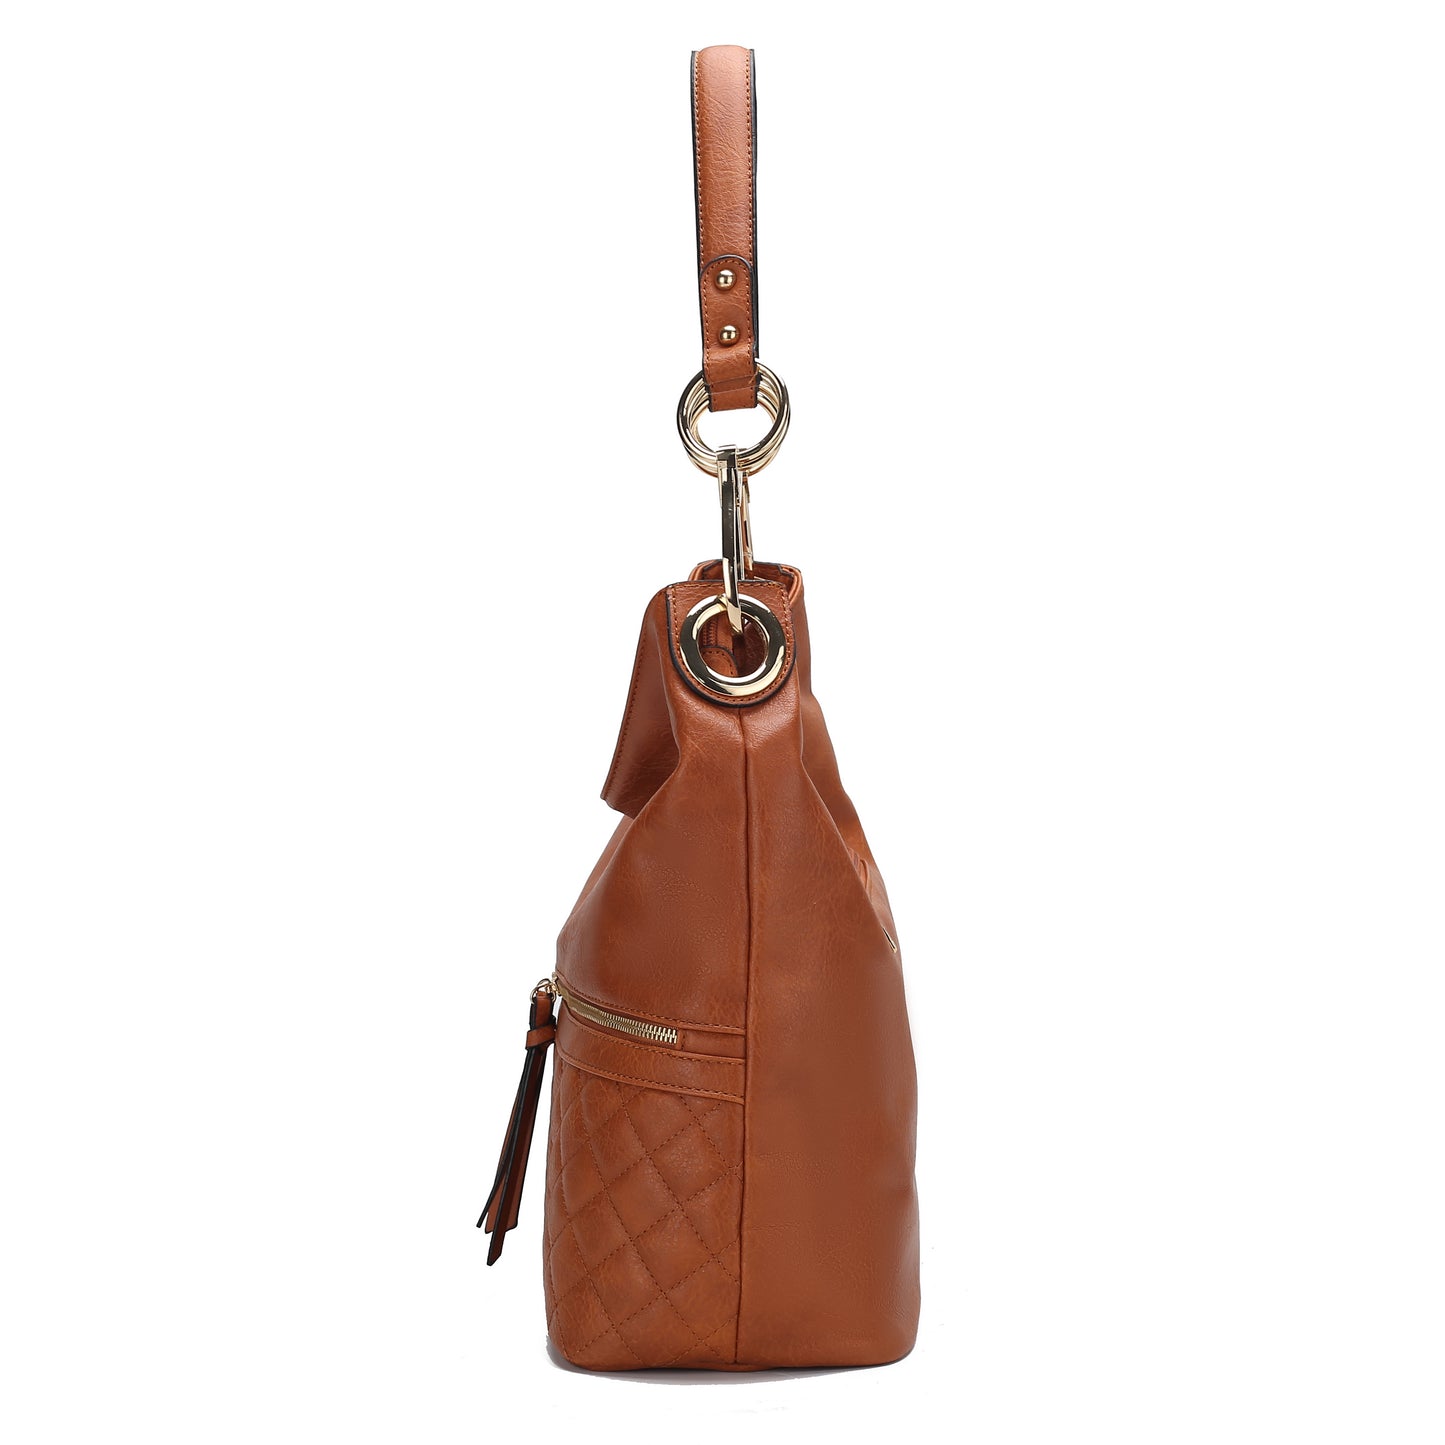 A stylish Dalila Vegan Leather Women Shoulder Handbag by Pink Orpheus with a zipper.